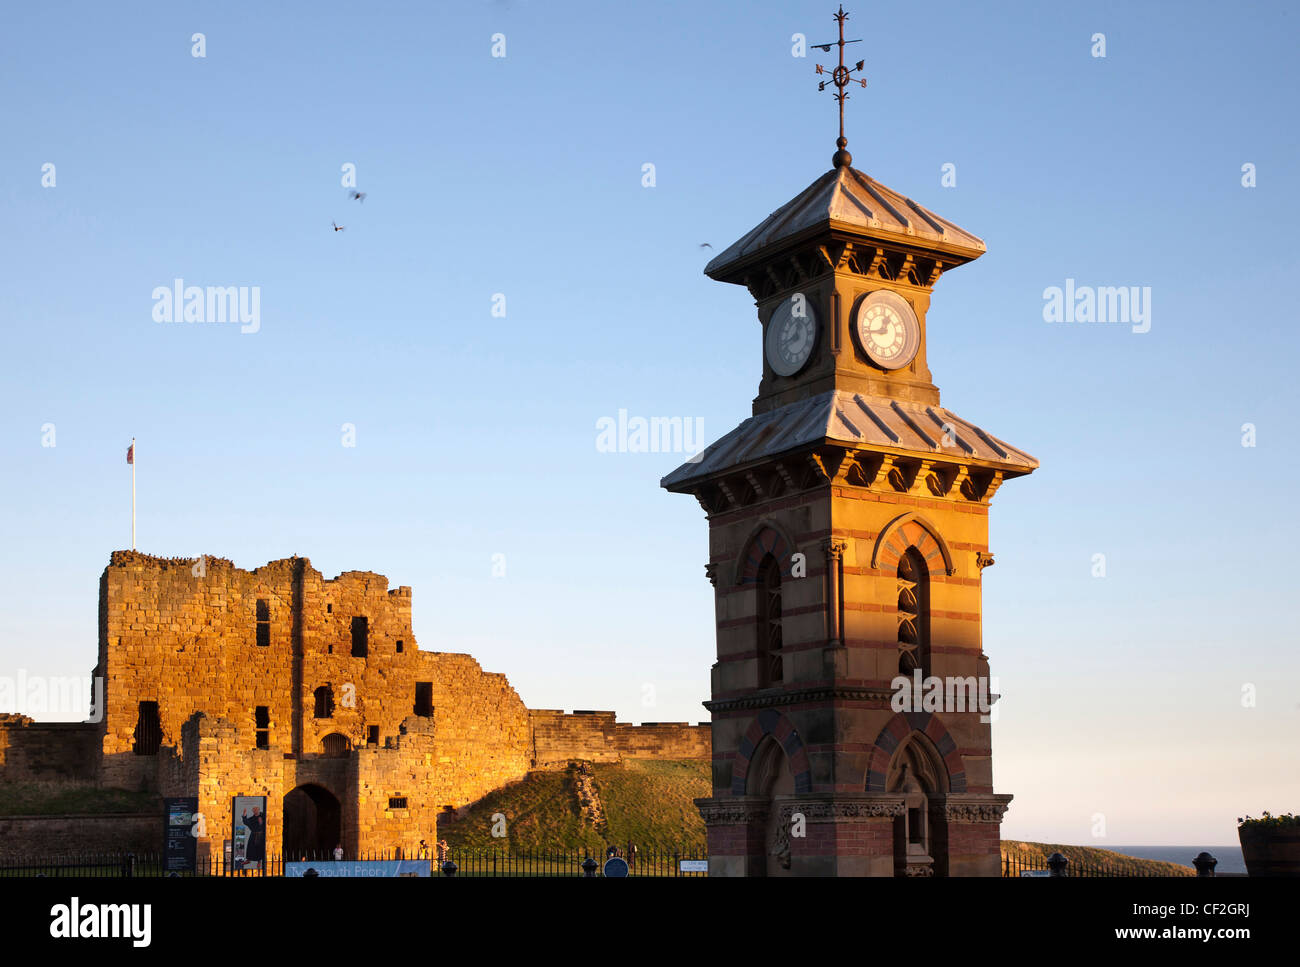 Stadt-Uhr, Tynemouth Schloss und Torhaus, Tynemouth, North Tyneside Stockfoto